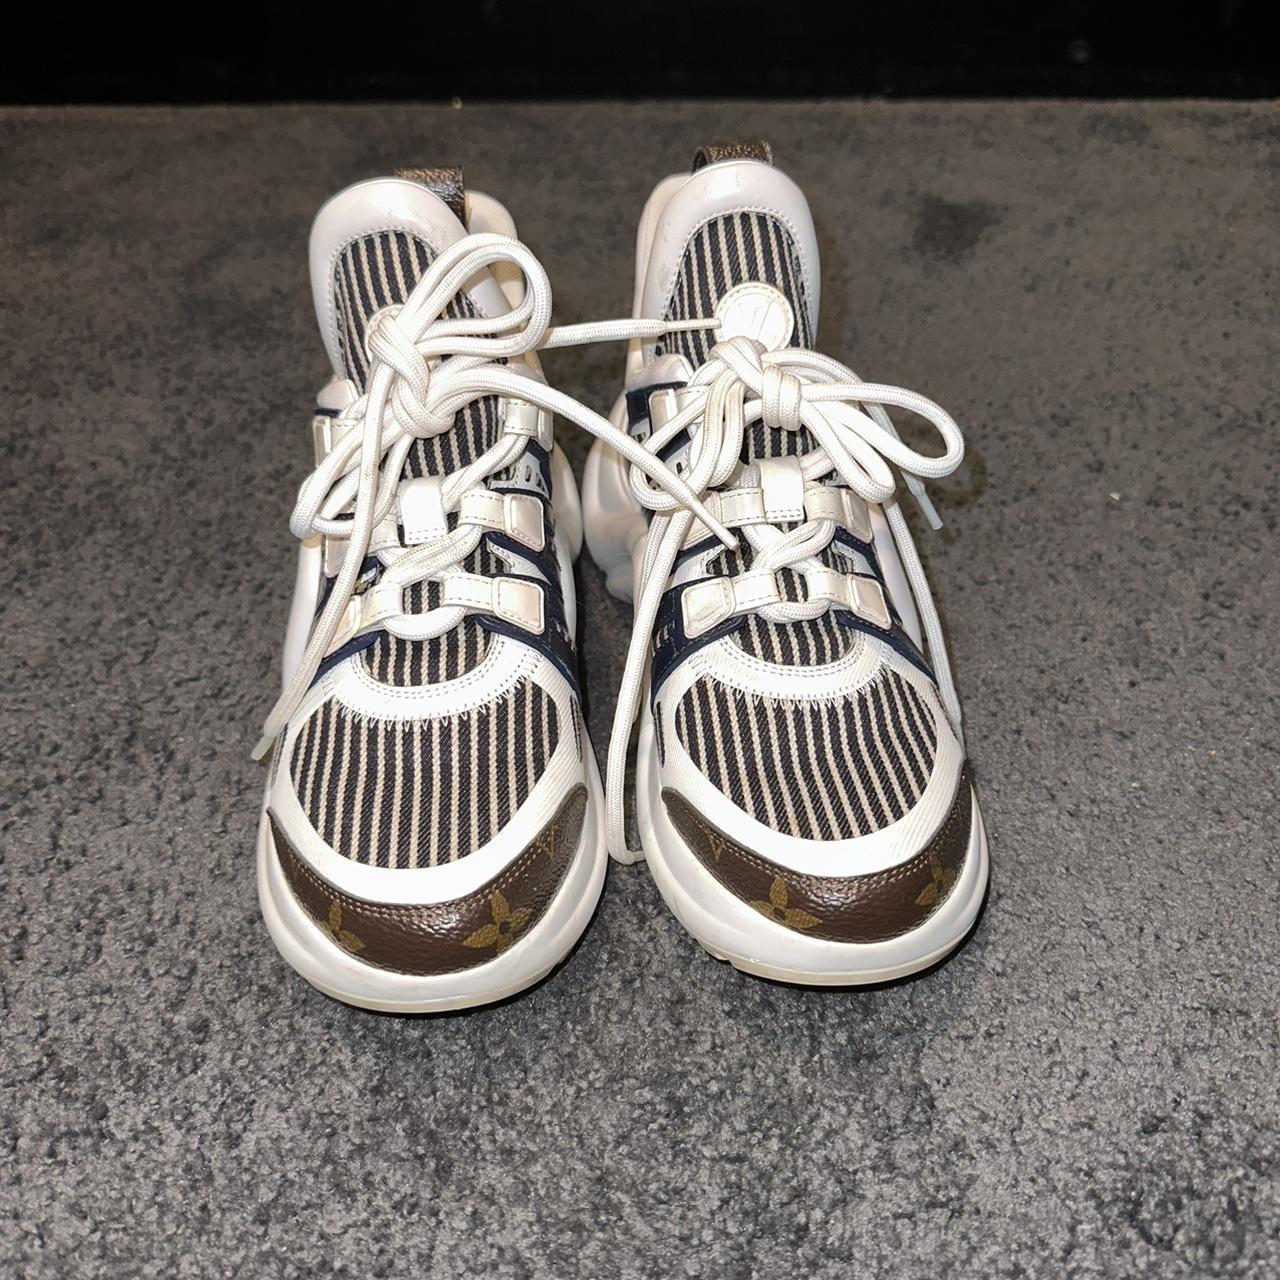 Louis Vuitton High Top Sneakers Size 10.5 Fits - Depop